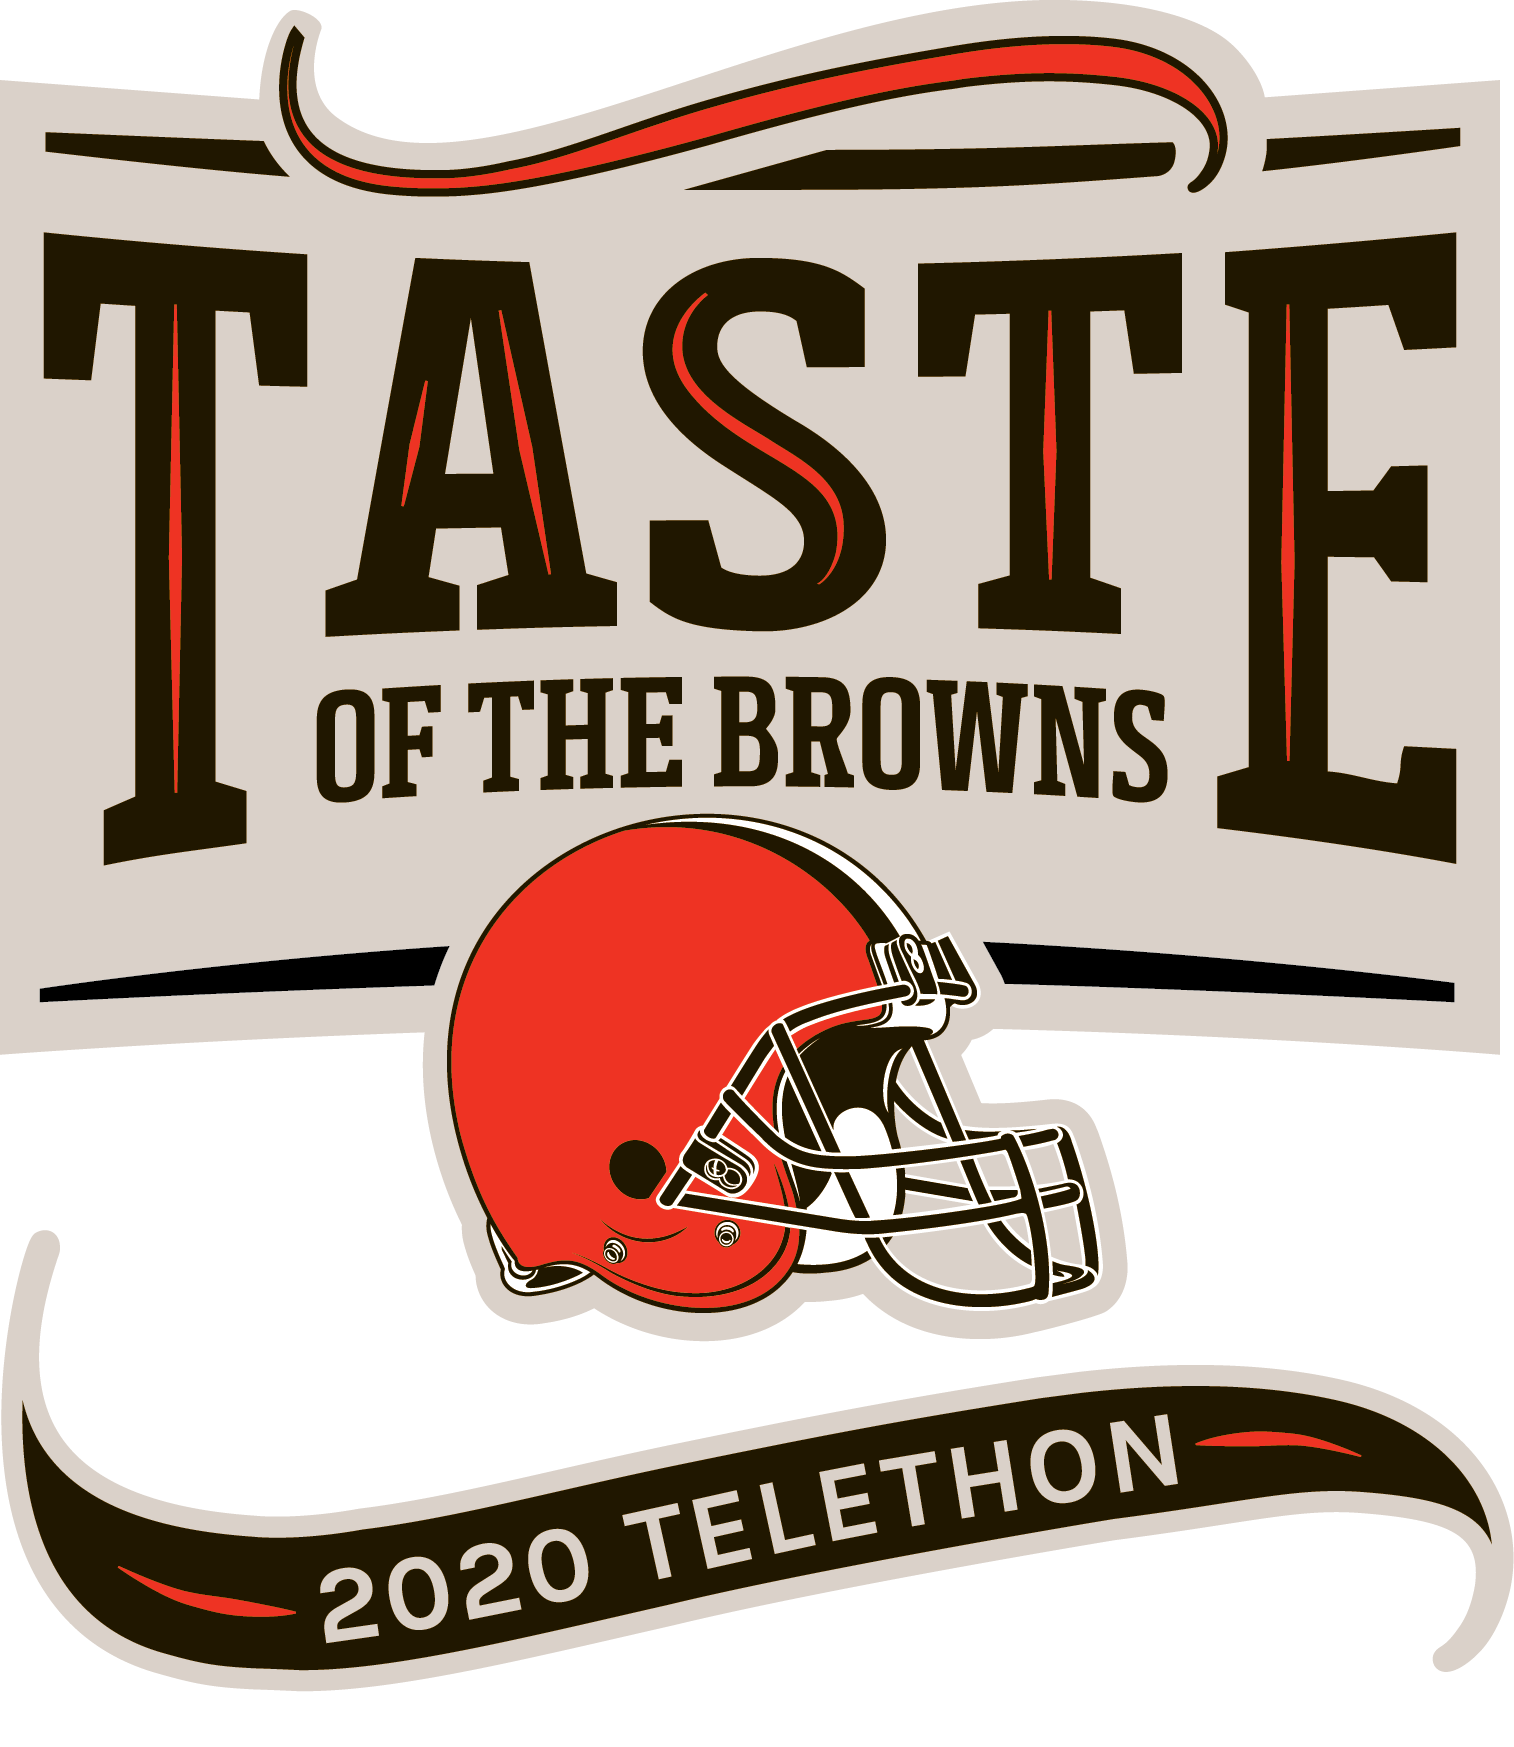 2020 Taste of the Browns Telethon